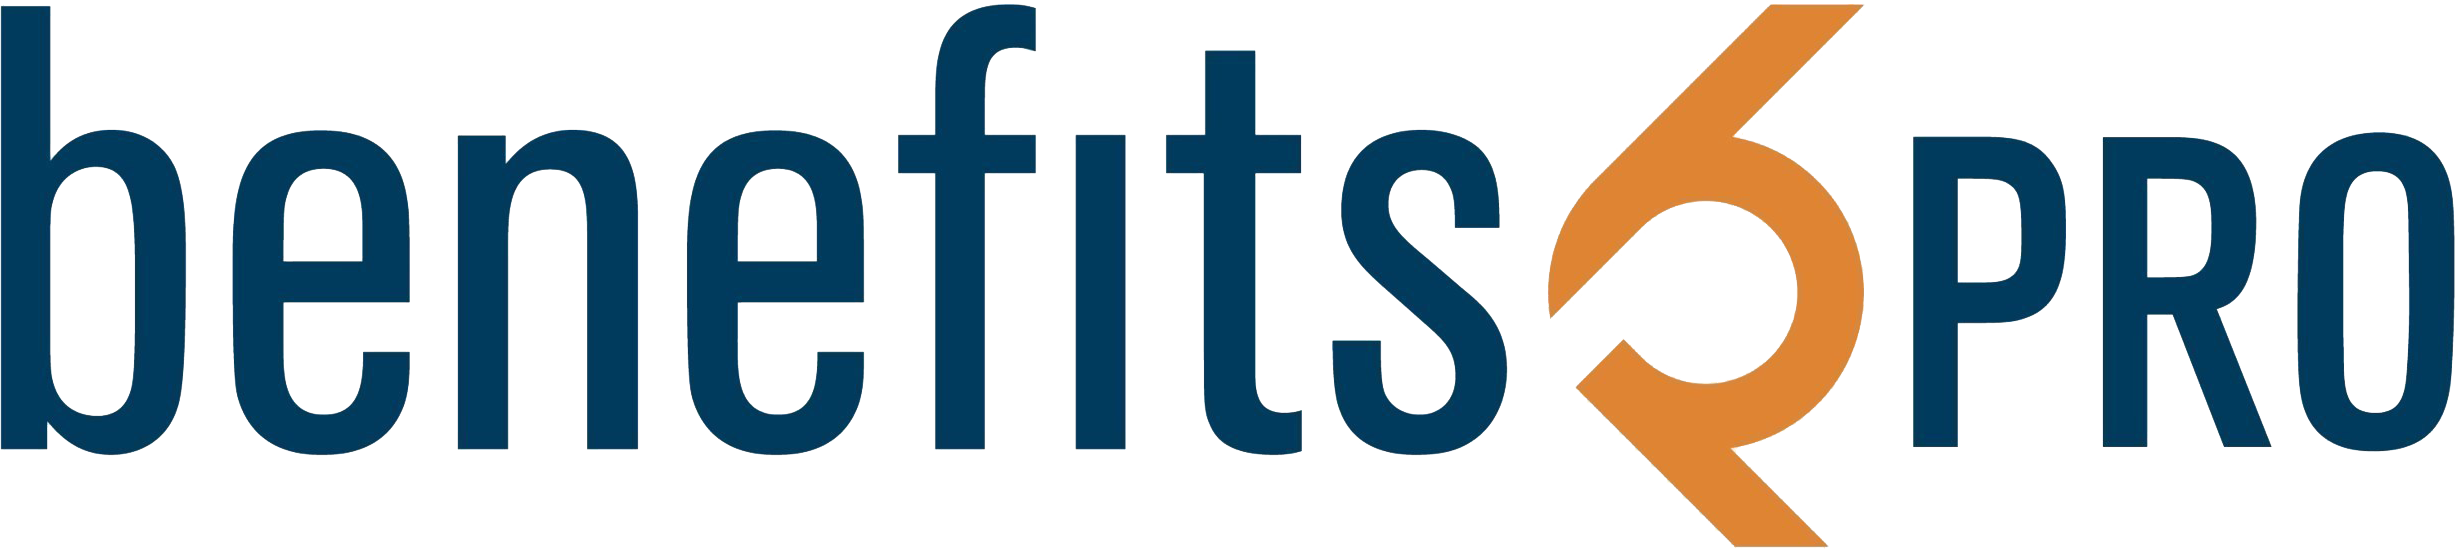 Benefits Pro logo.